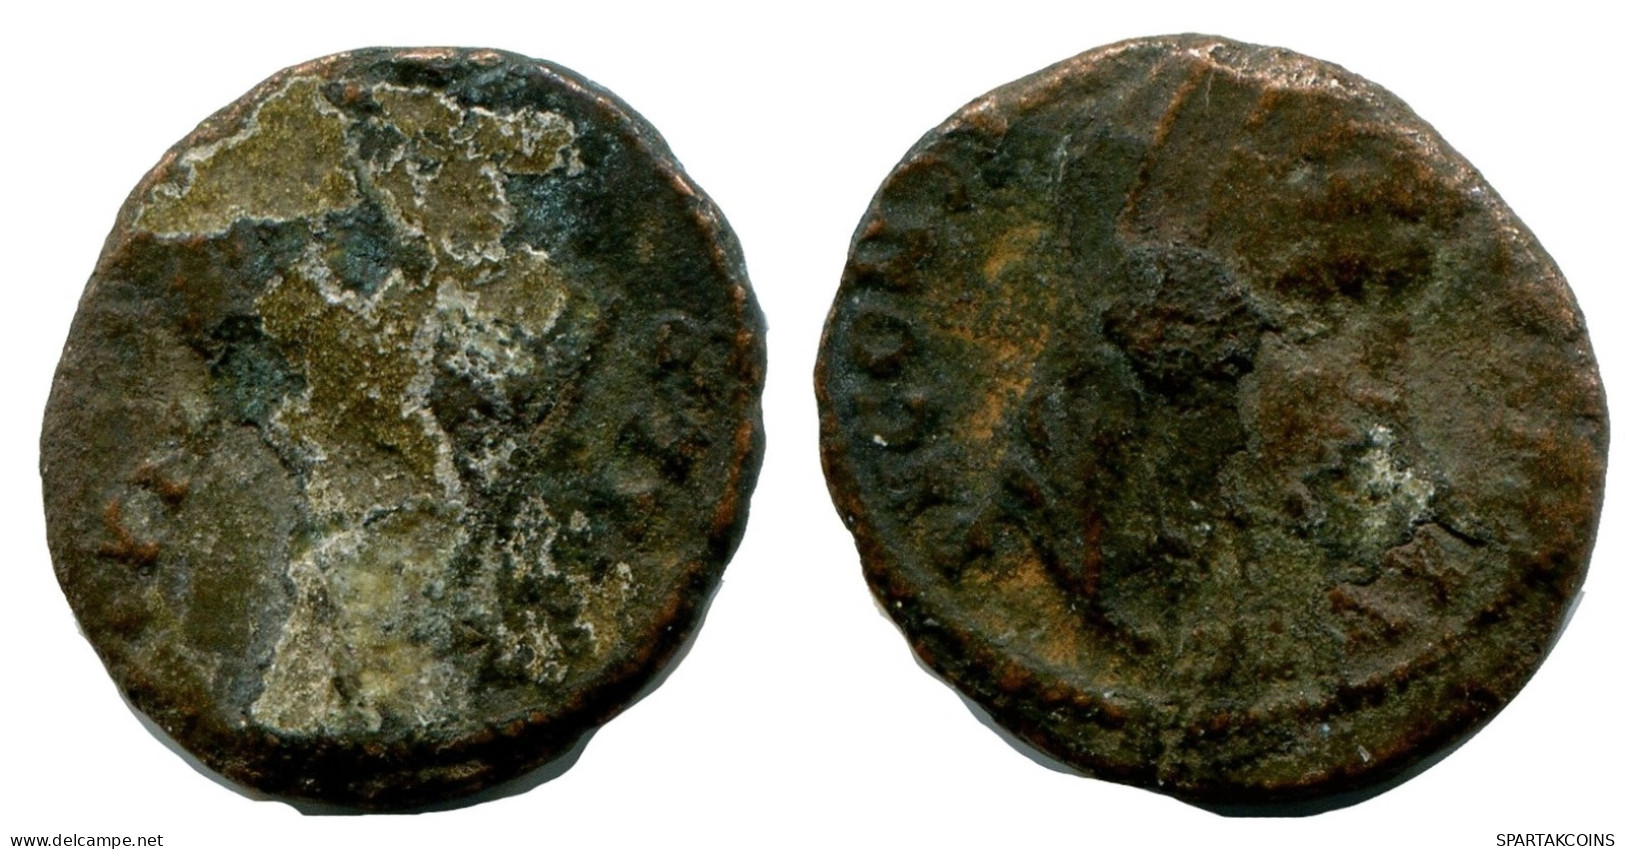 ROMAN Moneda MINTED IN ALEKSANDRIA FROM THE ROYAL ONTARIO MUSEUM #ANC10161.14.E.A - El Imperio Christiano (307 / 363)